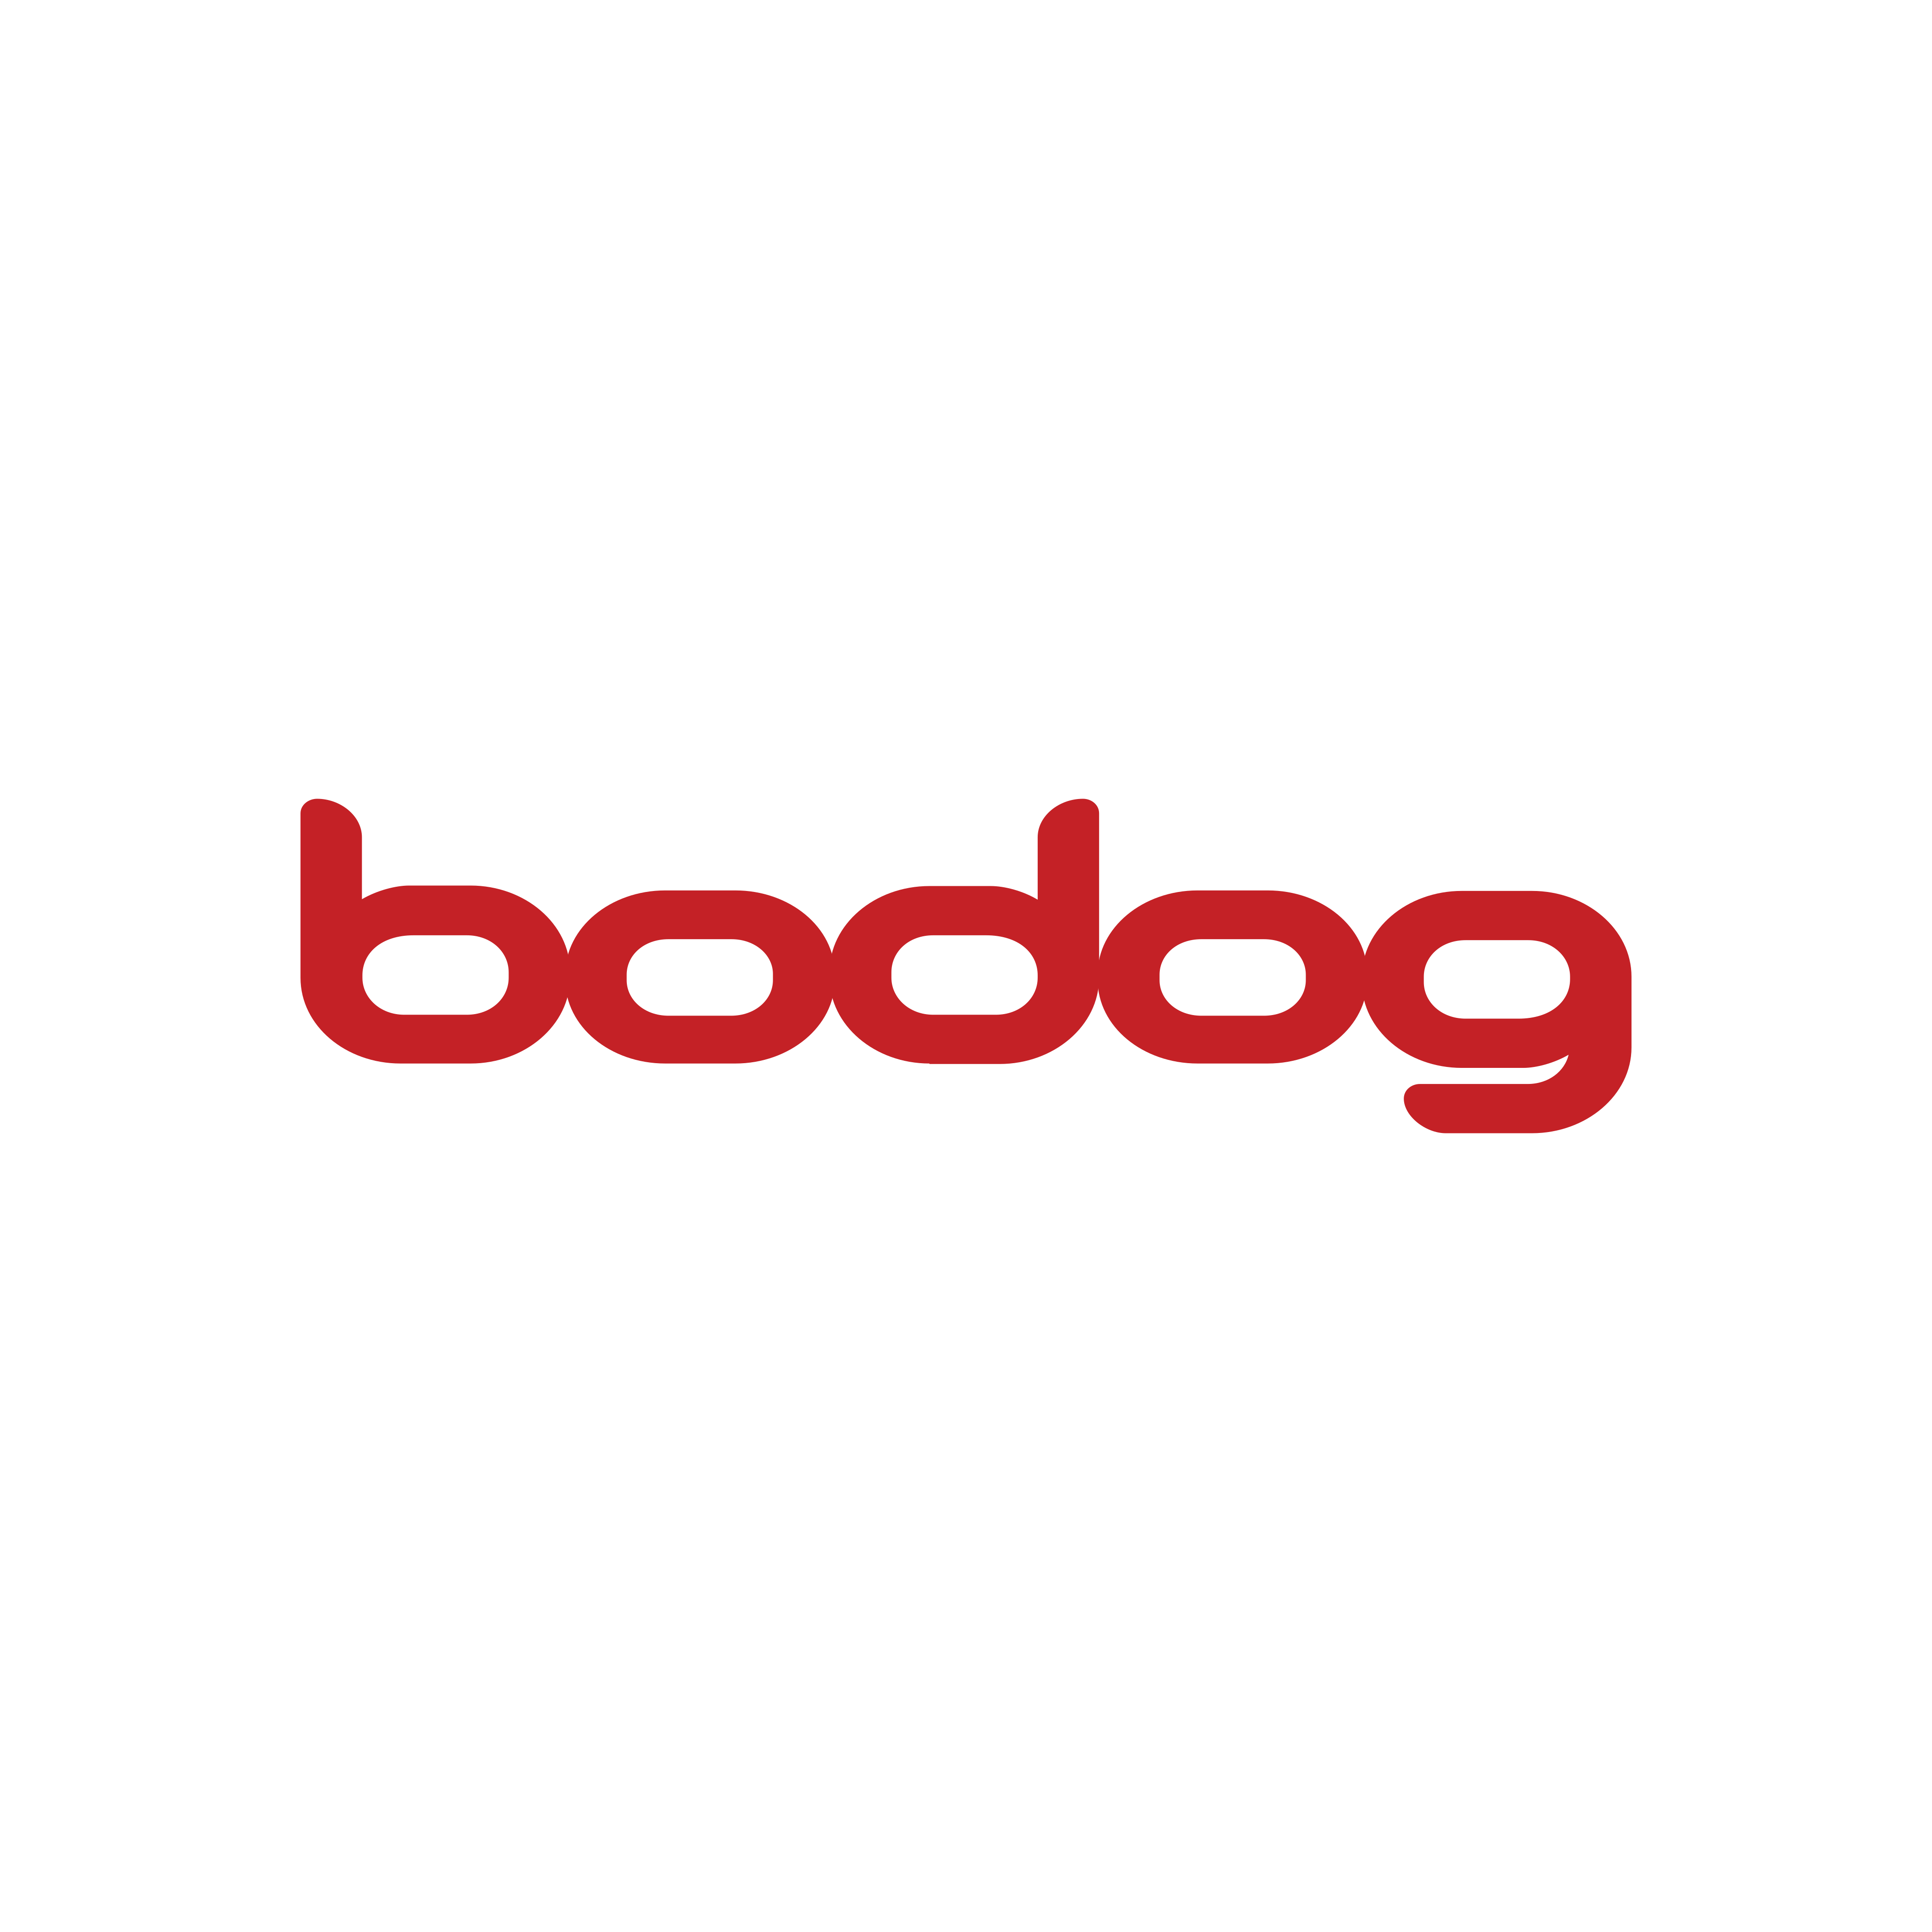 bodog logo 0 - Bodog Logo